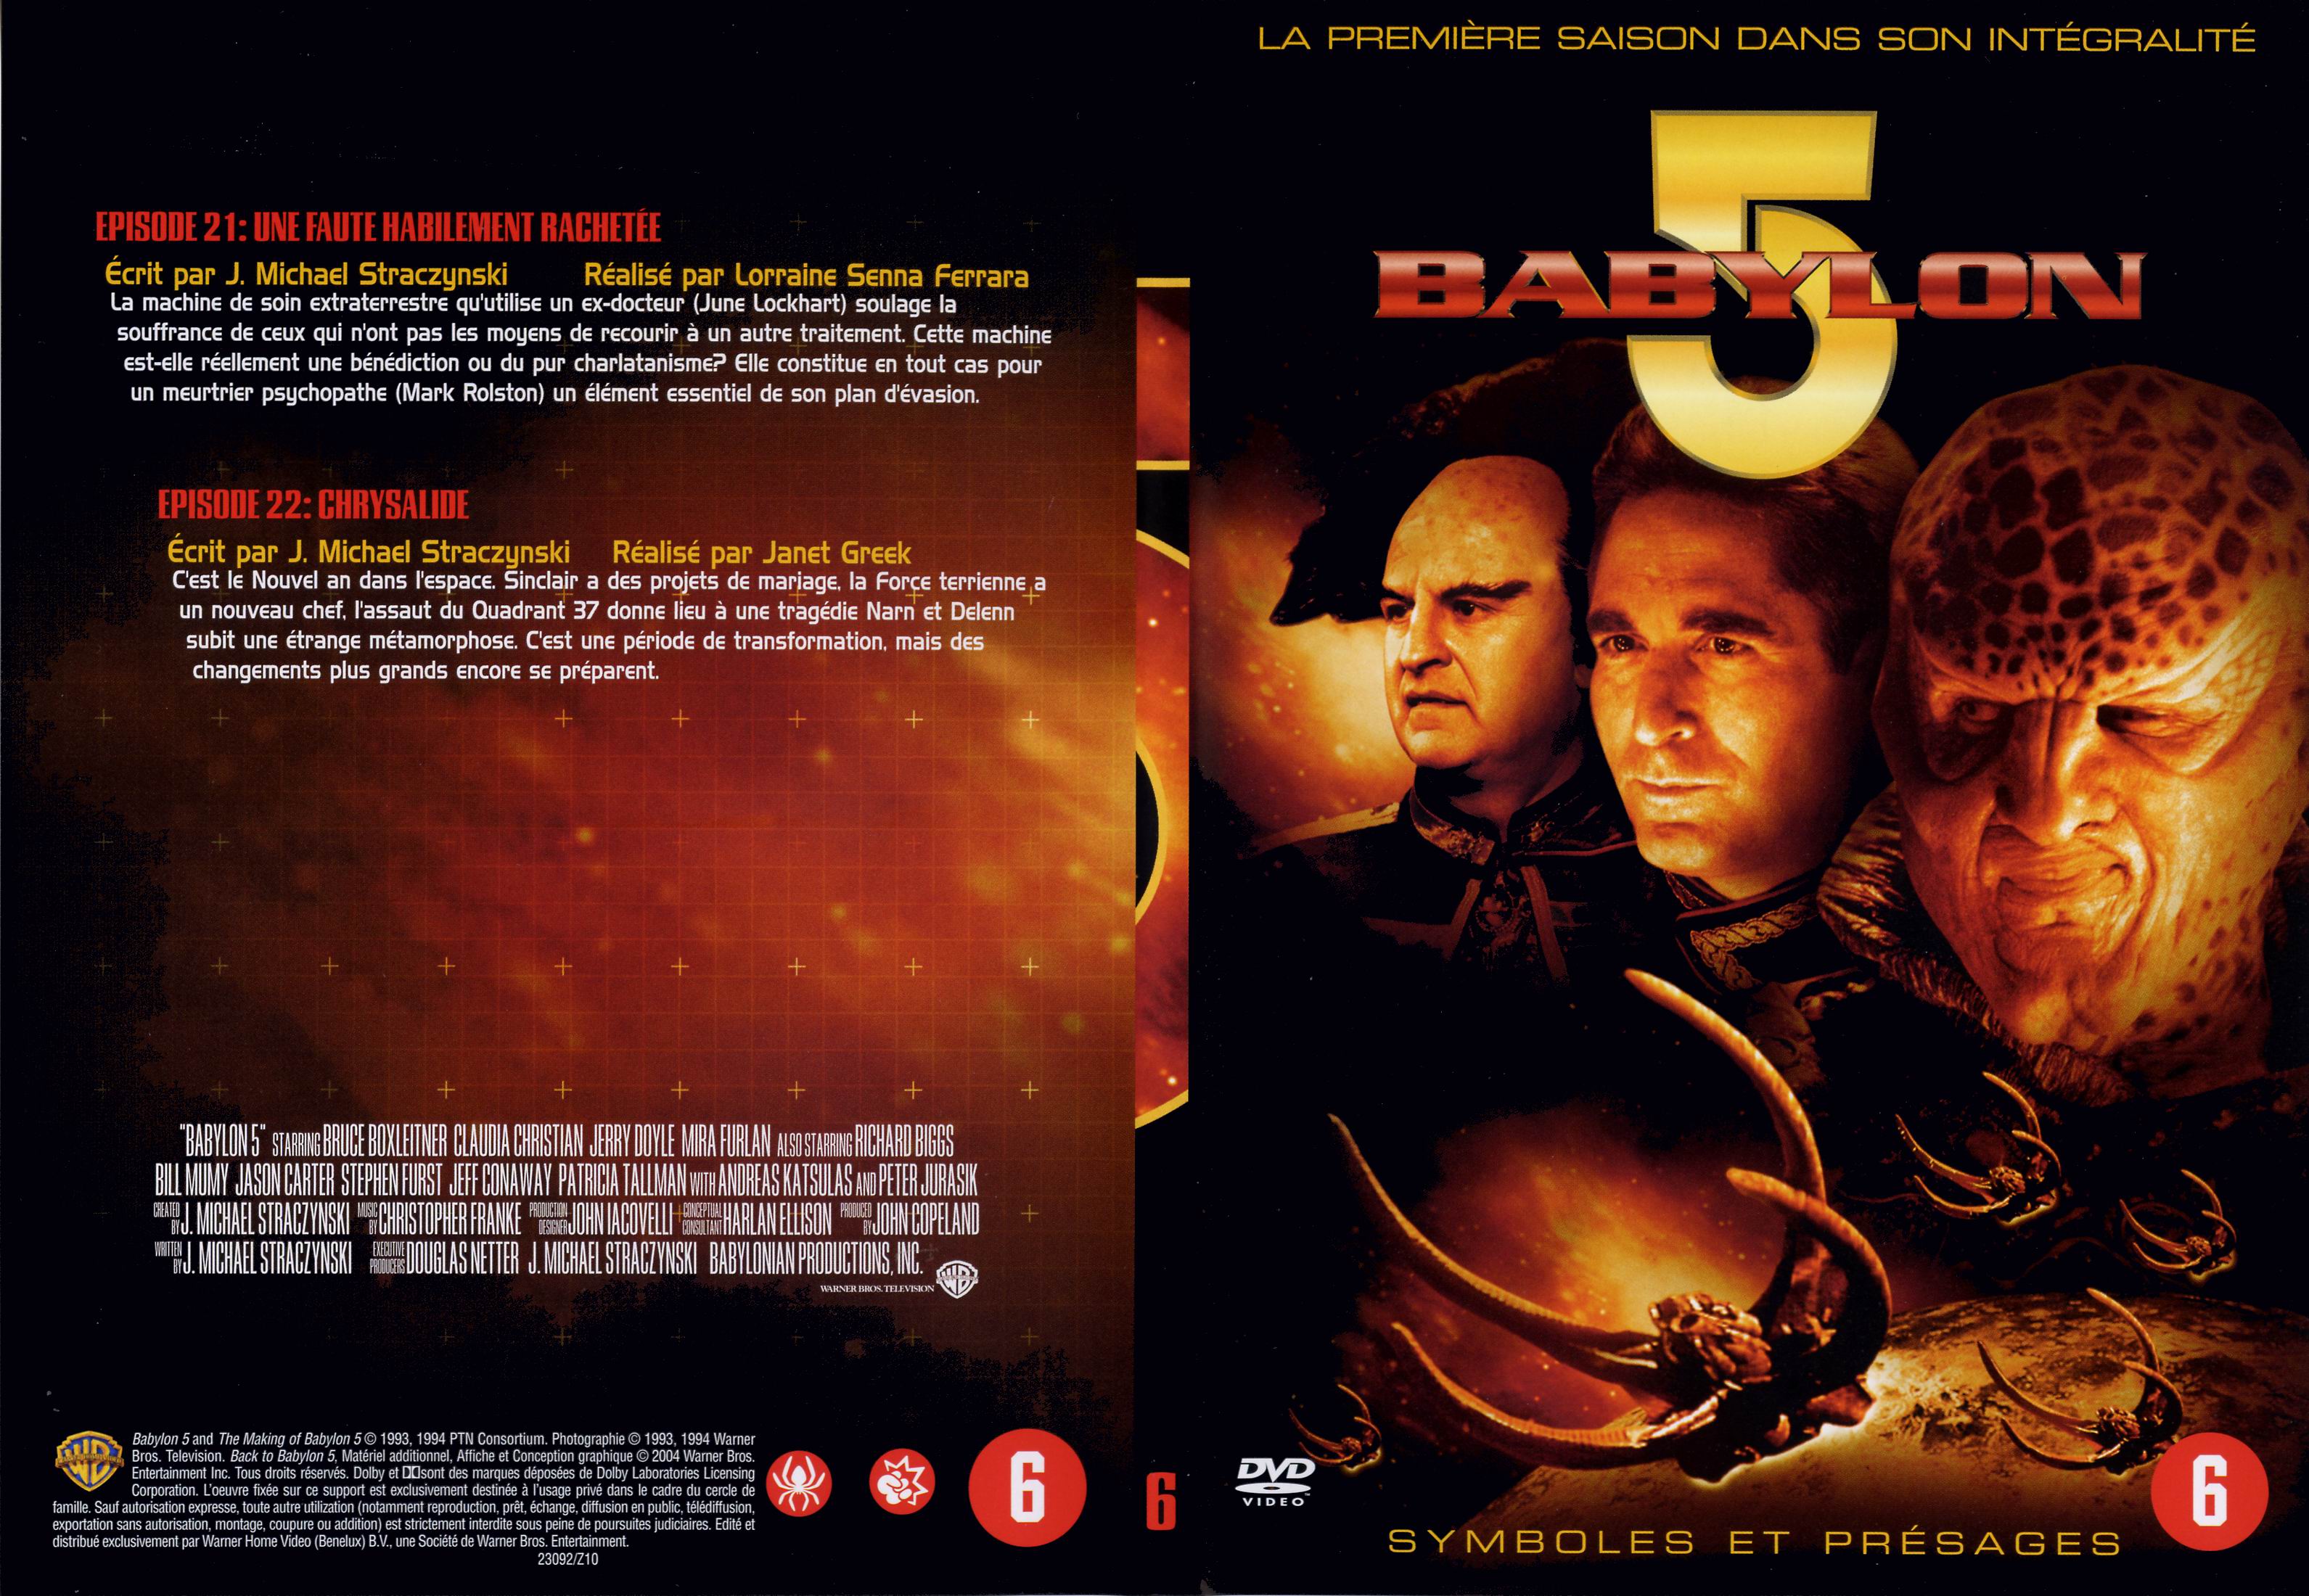 Jaquette DVD Babylon 5 saison 1 dvd 6